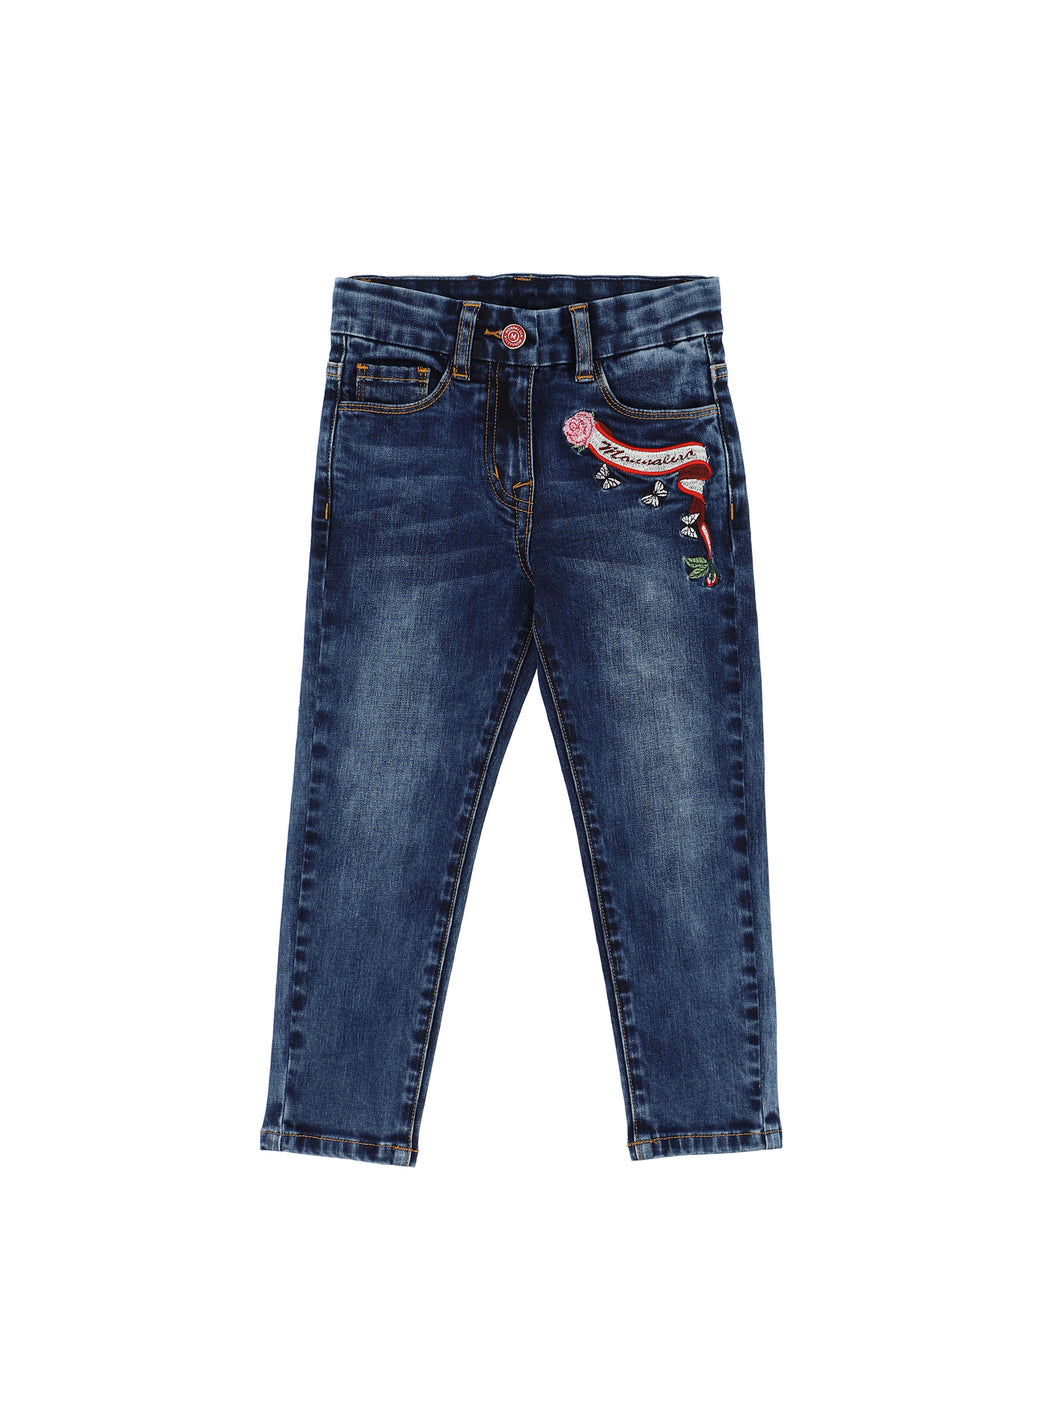 Five-pocket embroidered jeans